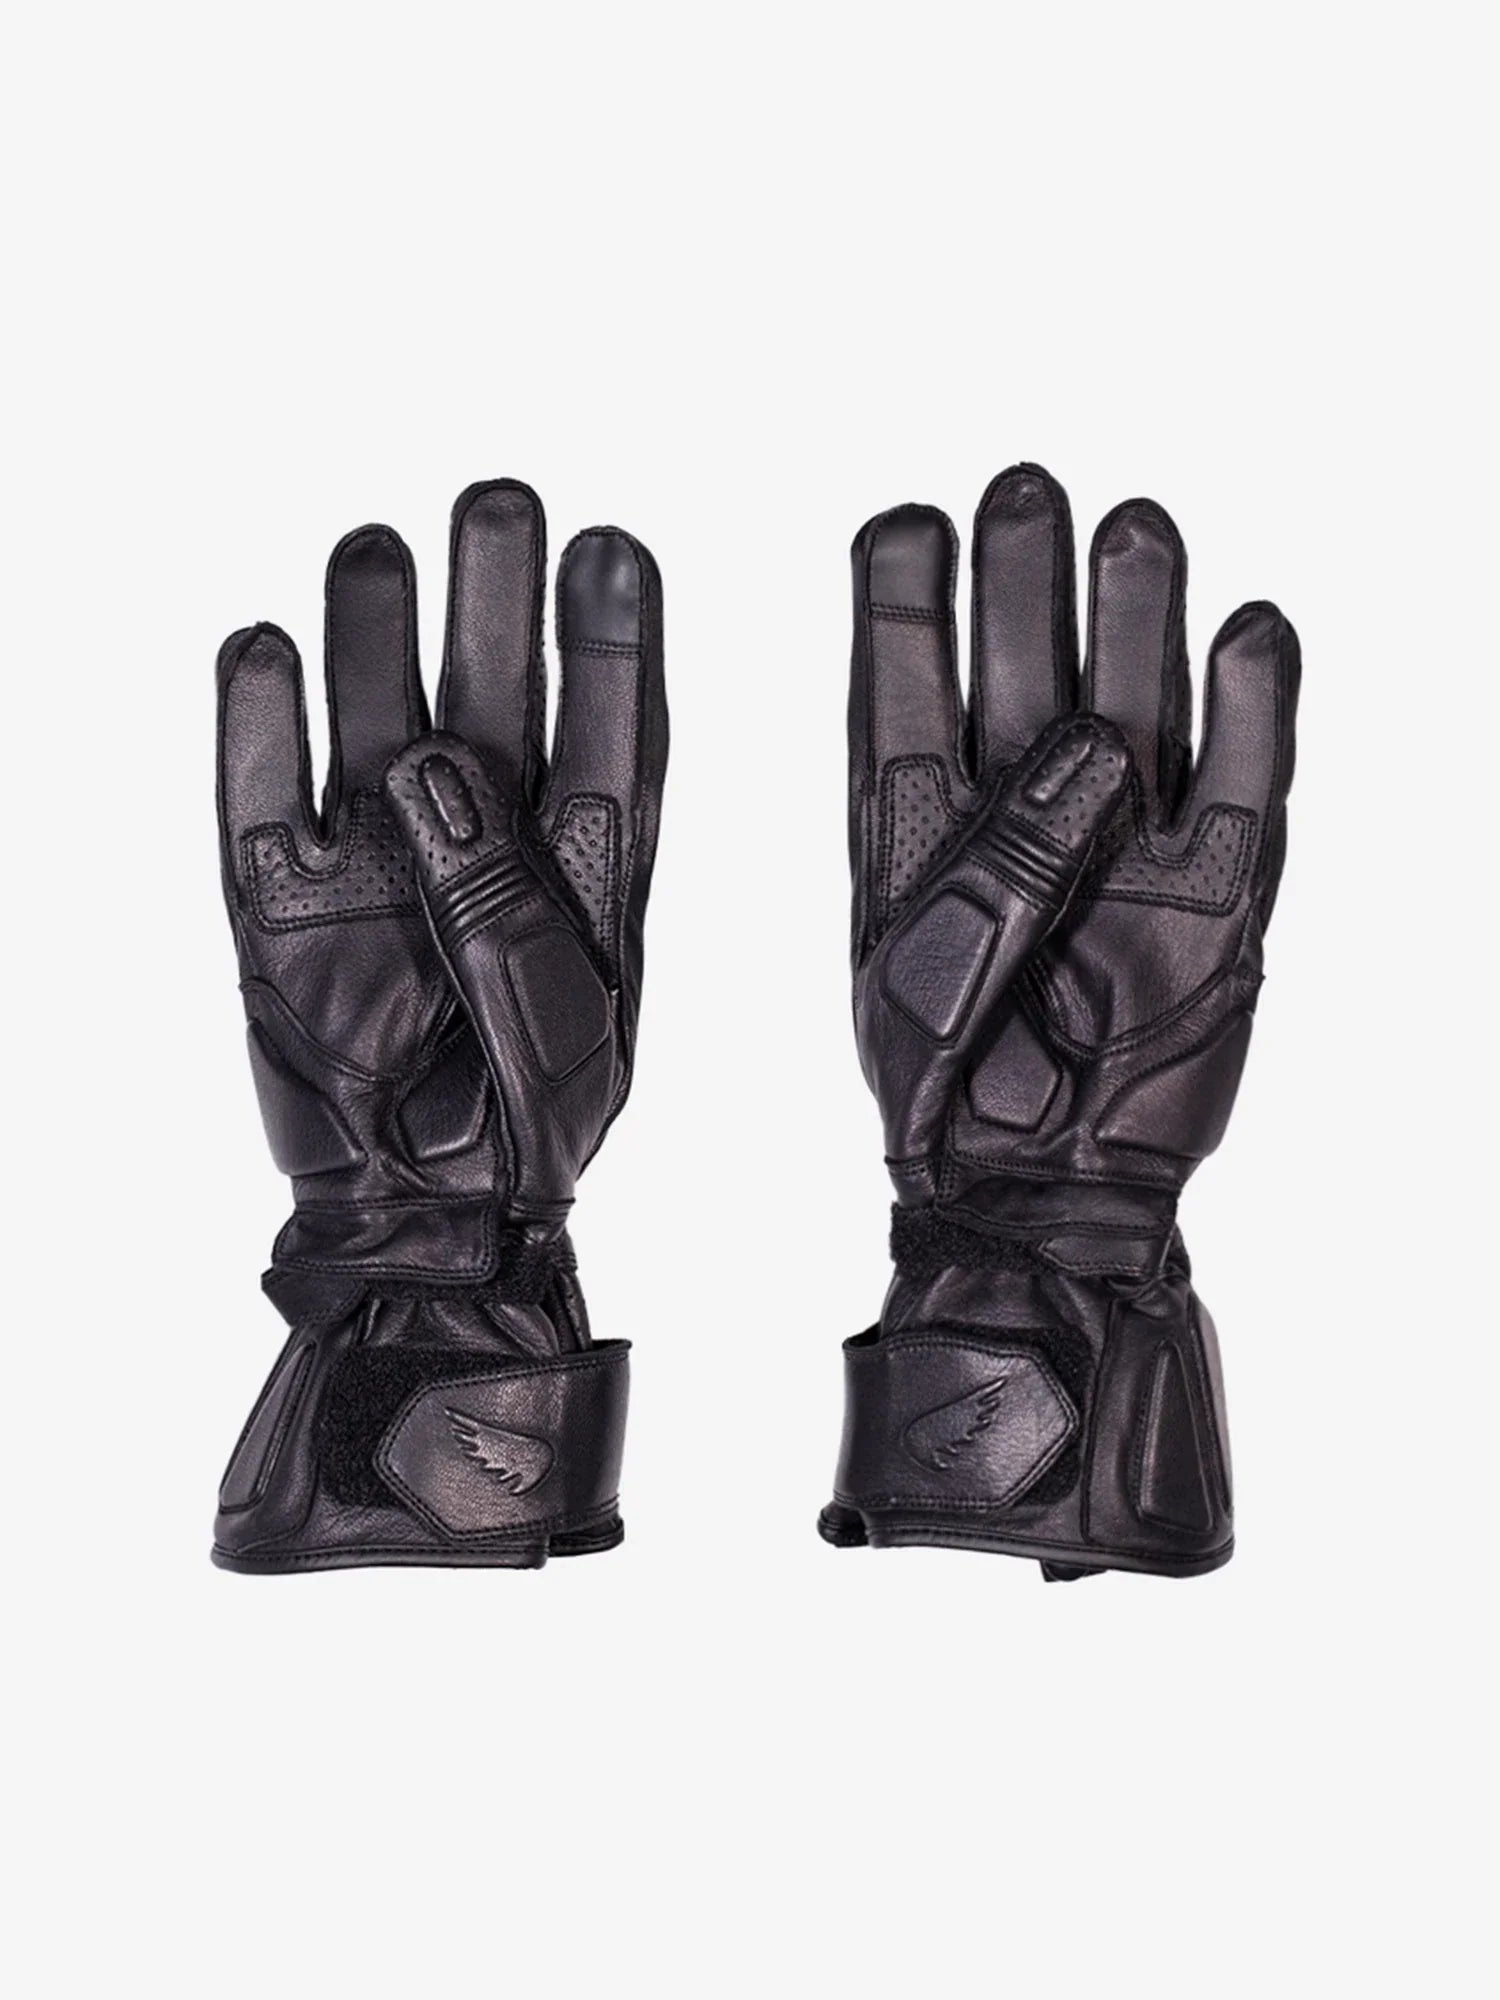 SA1NT Road Gloves - Saint USA